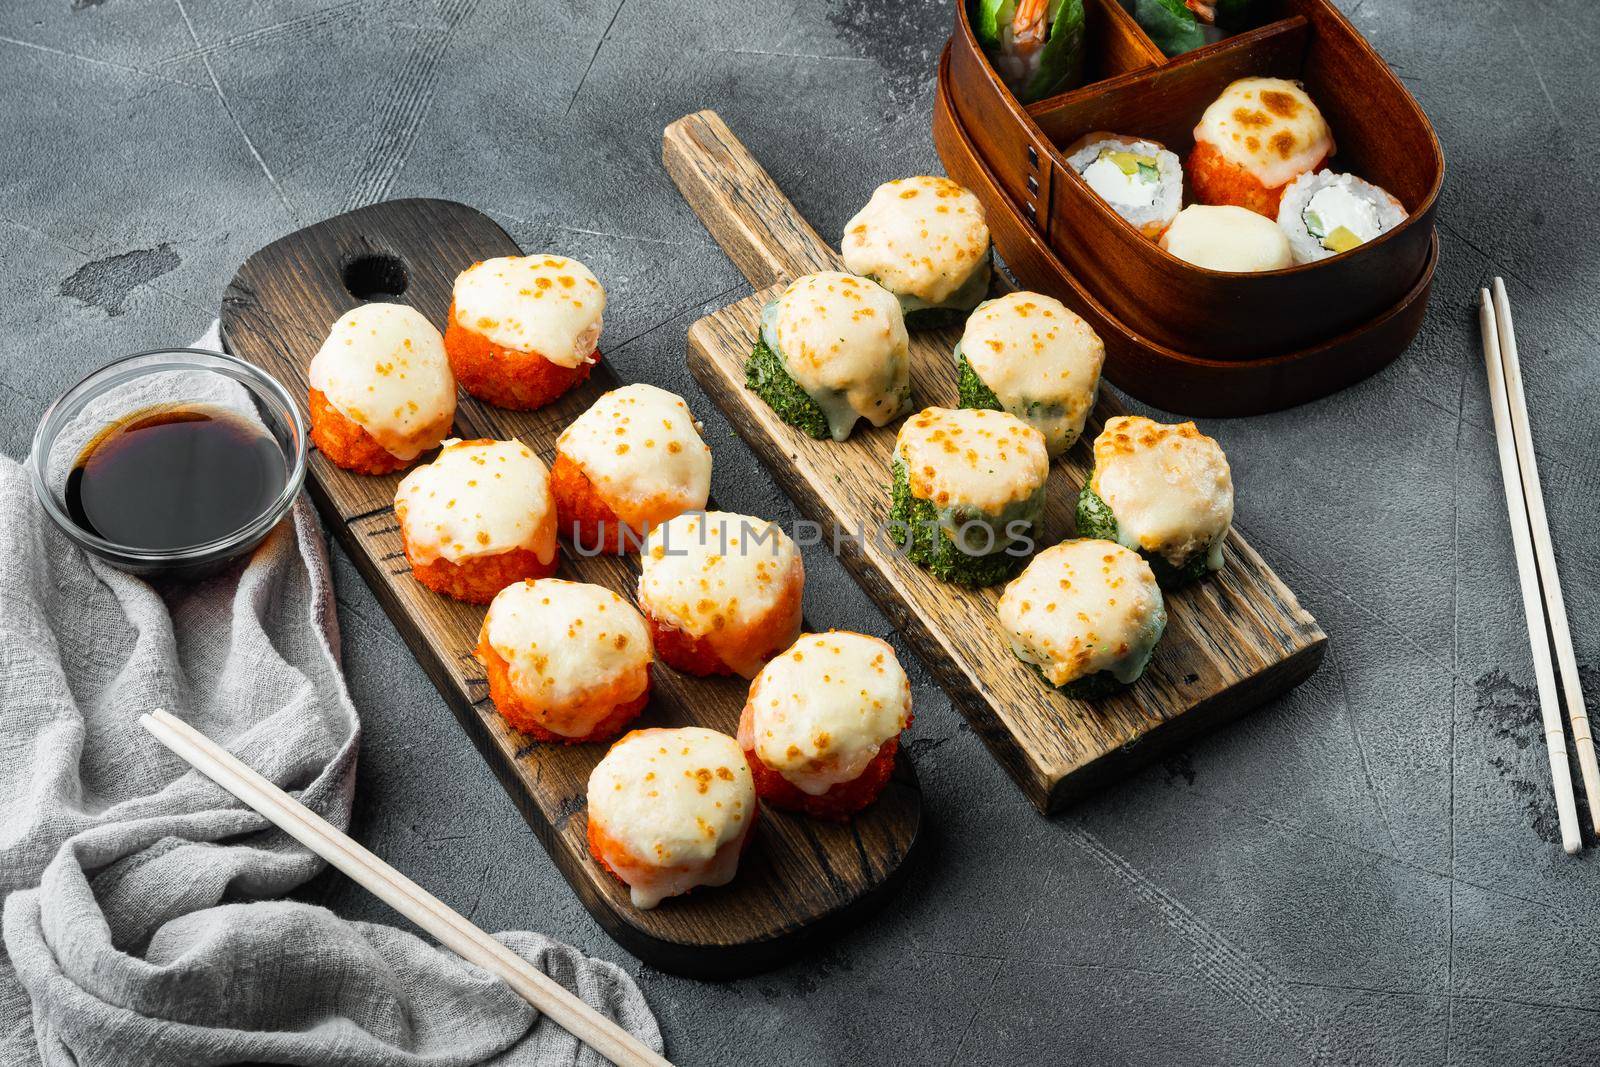 Japanese sushi rolls named Baked Ebi with wasabi and salmon fish set, on gray stone background